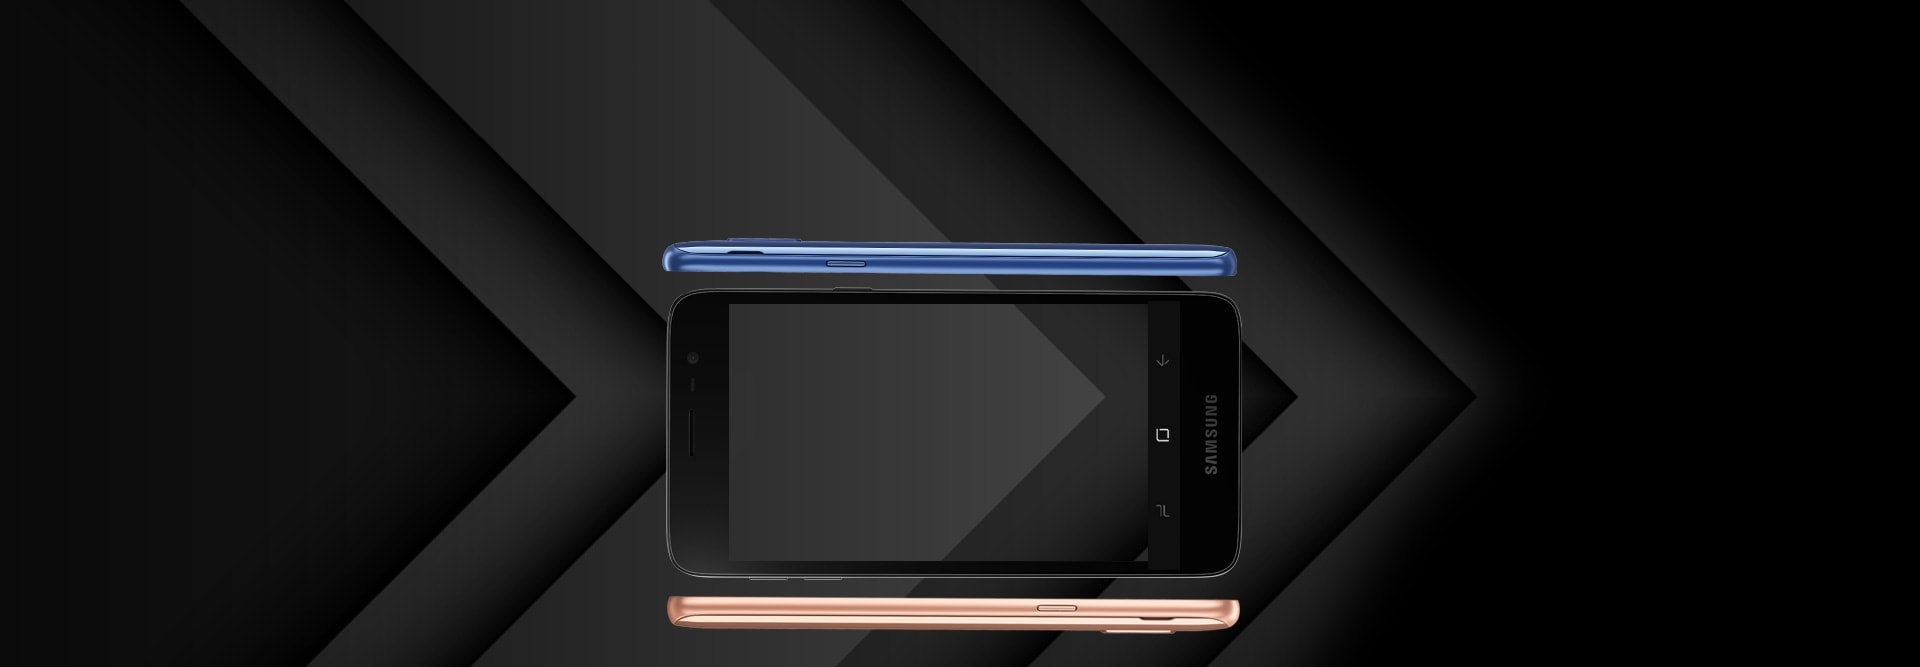 Design - Samsung Galaxy J2 Core